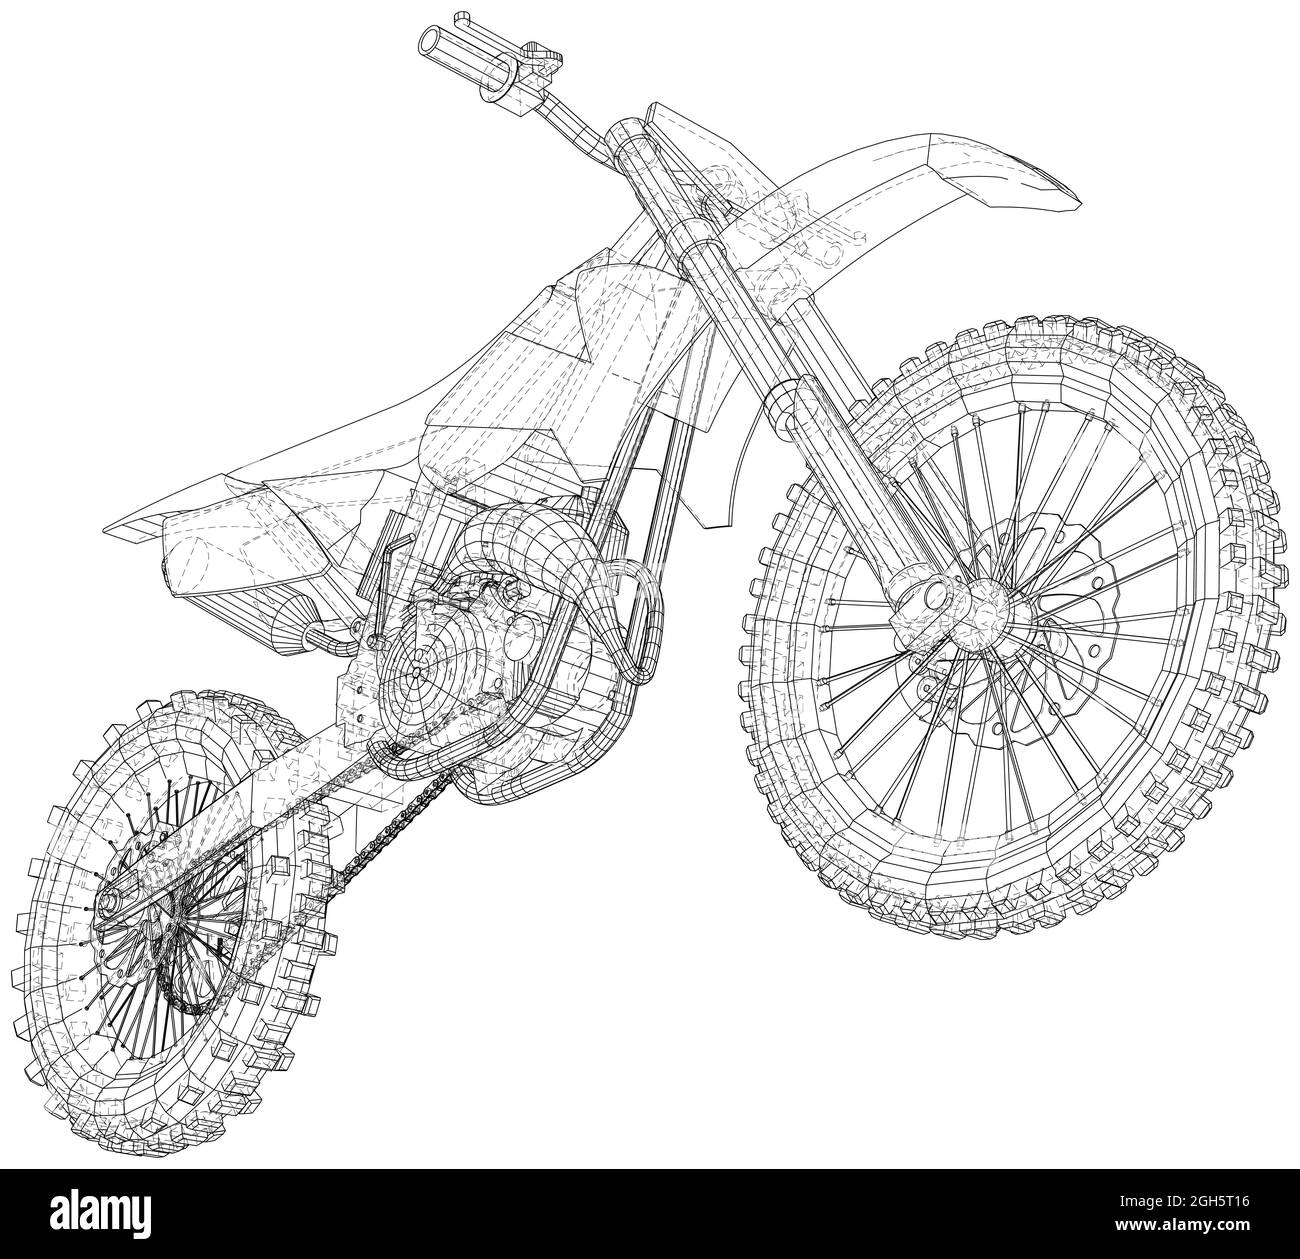 Superbike_by_mikednhm | Bike drawing, Bike sketch, Motorcycle drawing